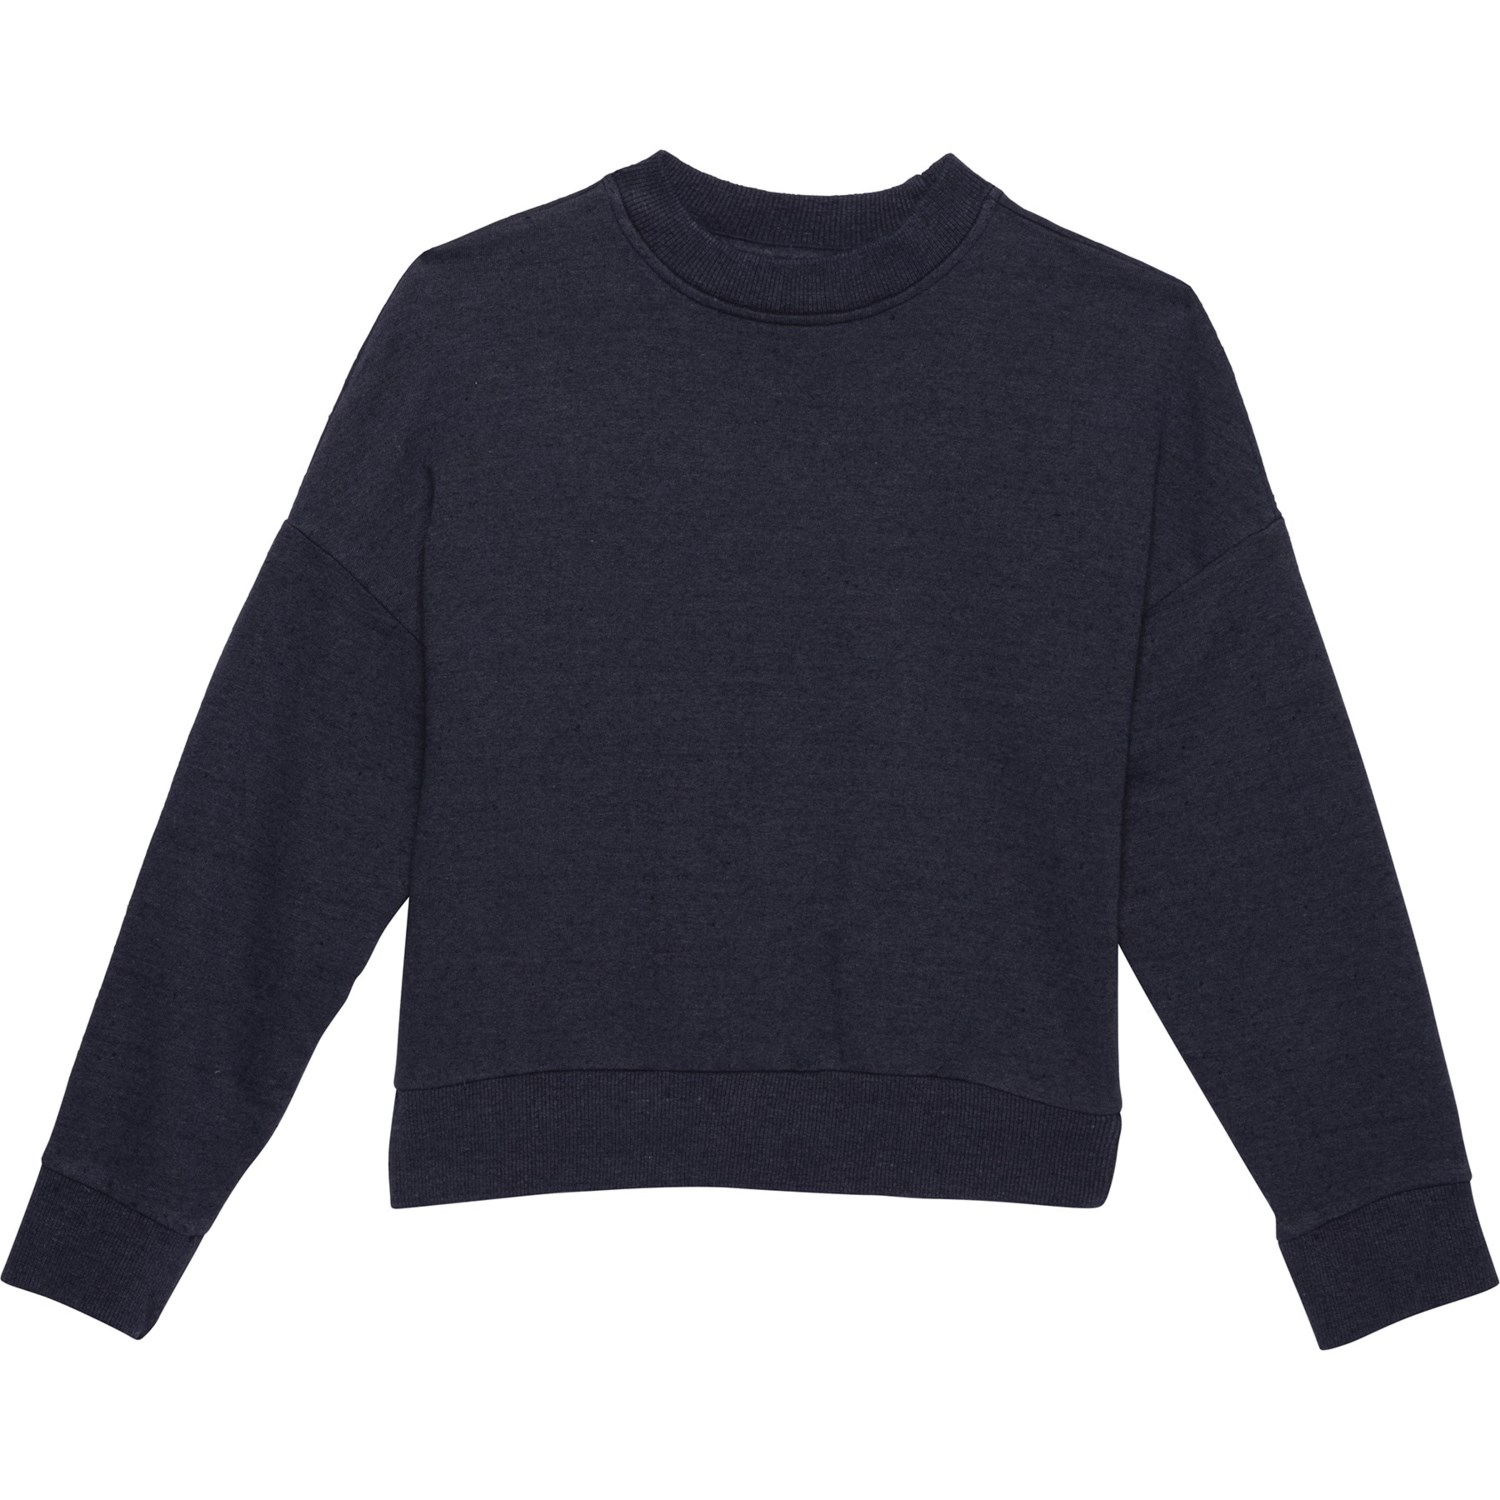 Kyodan Womens Long Sleeve Zip Up Sweater Jacket